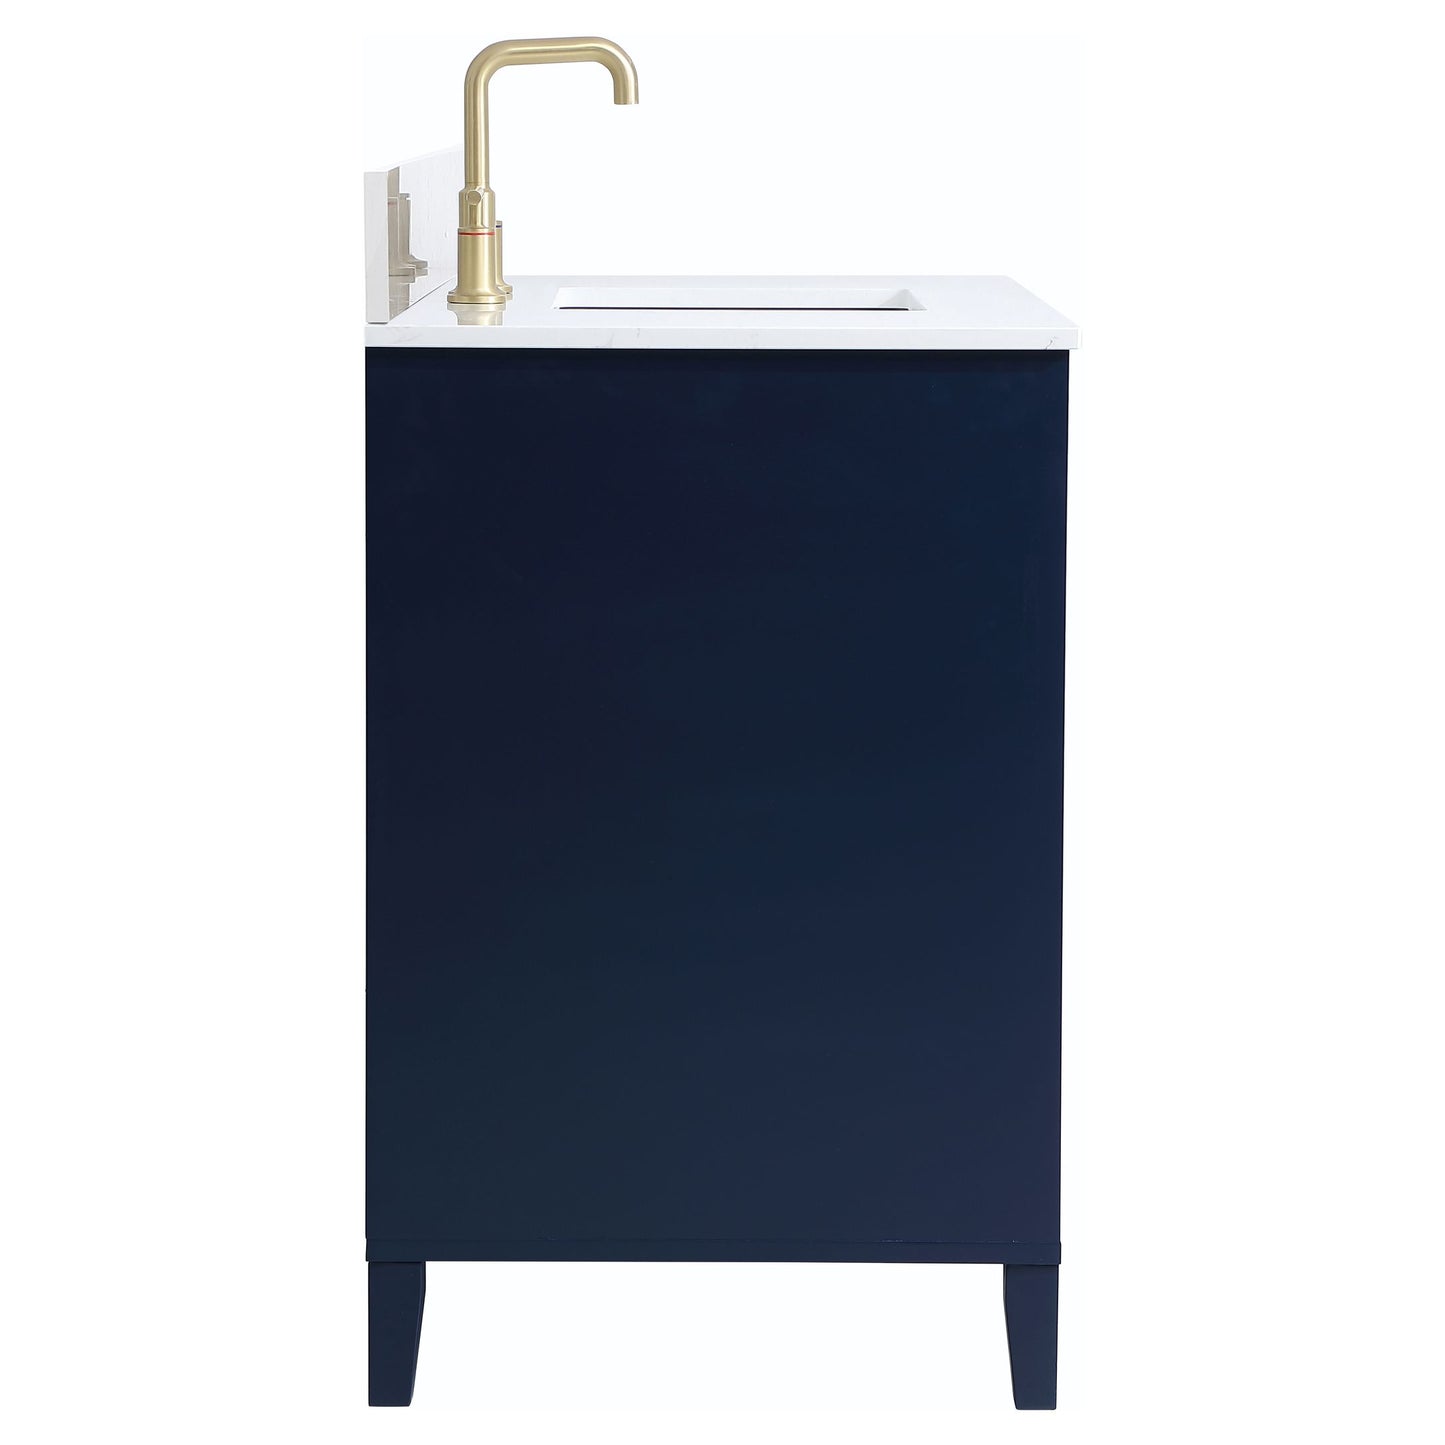 VF18042BL-BS 42" Single Bathroom Vanity in Blue With Backsplash